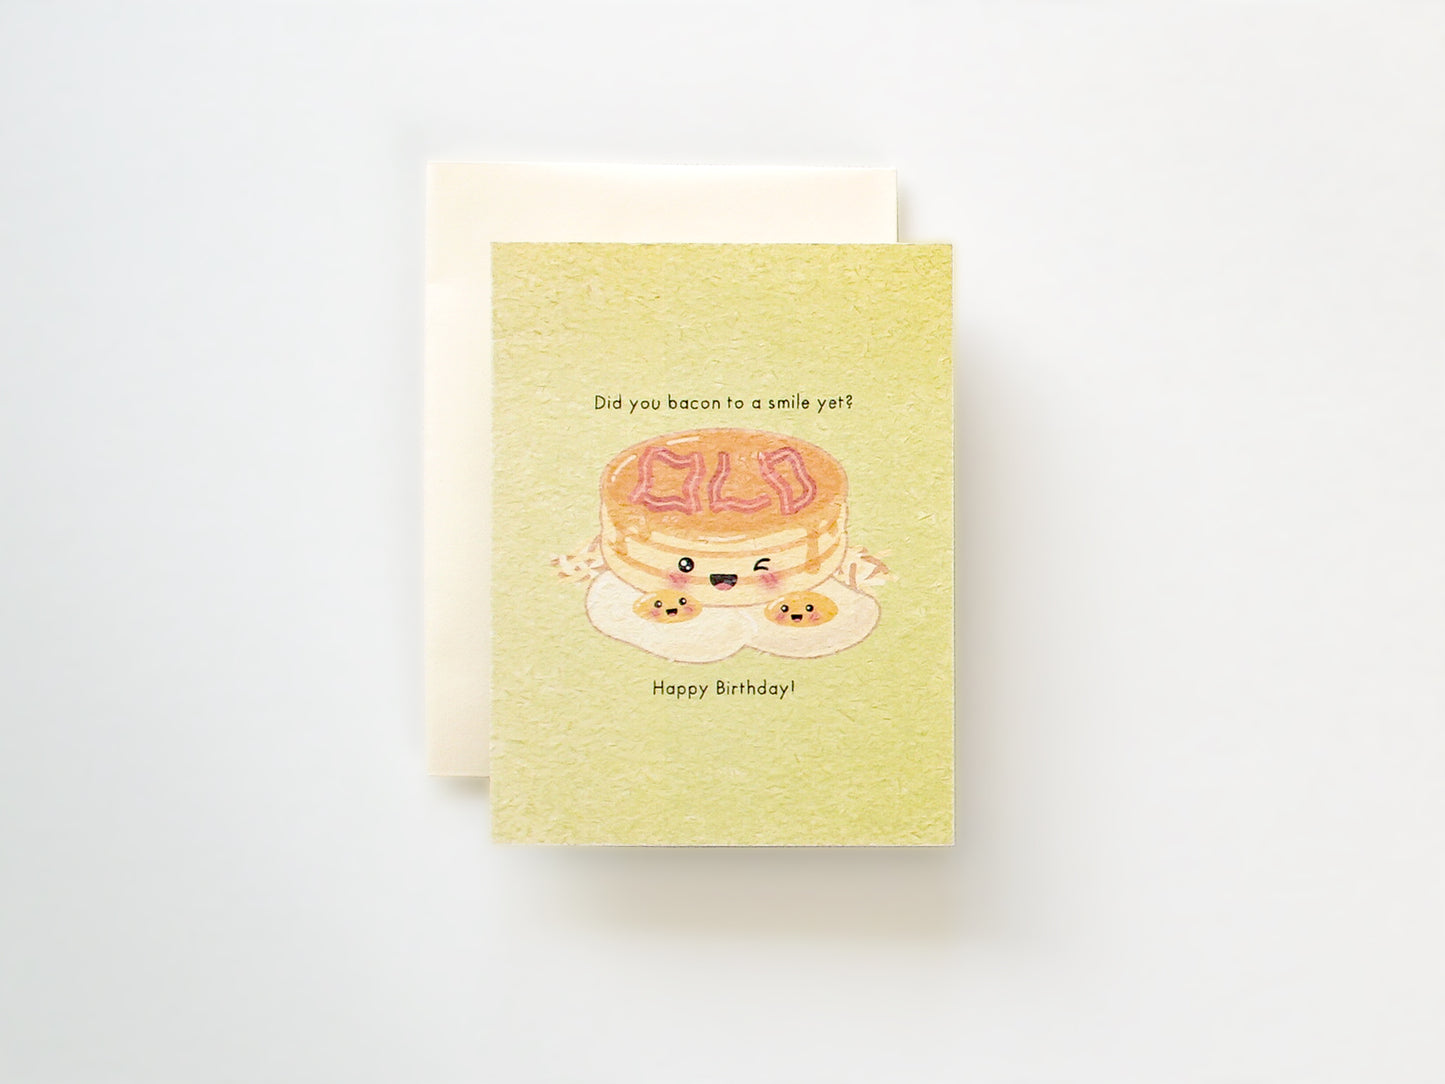 Bacon to a Smile Birthday Card